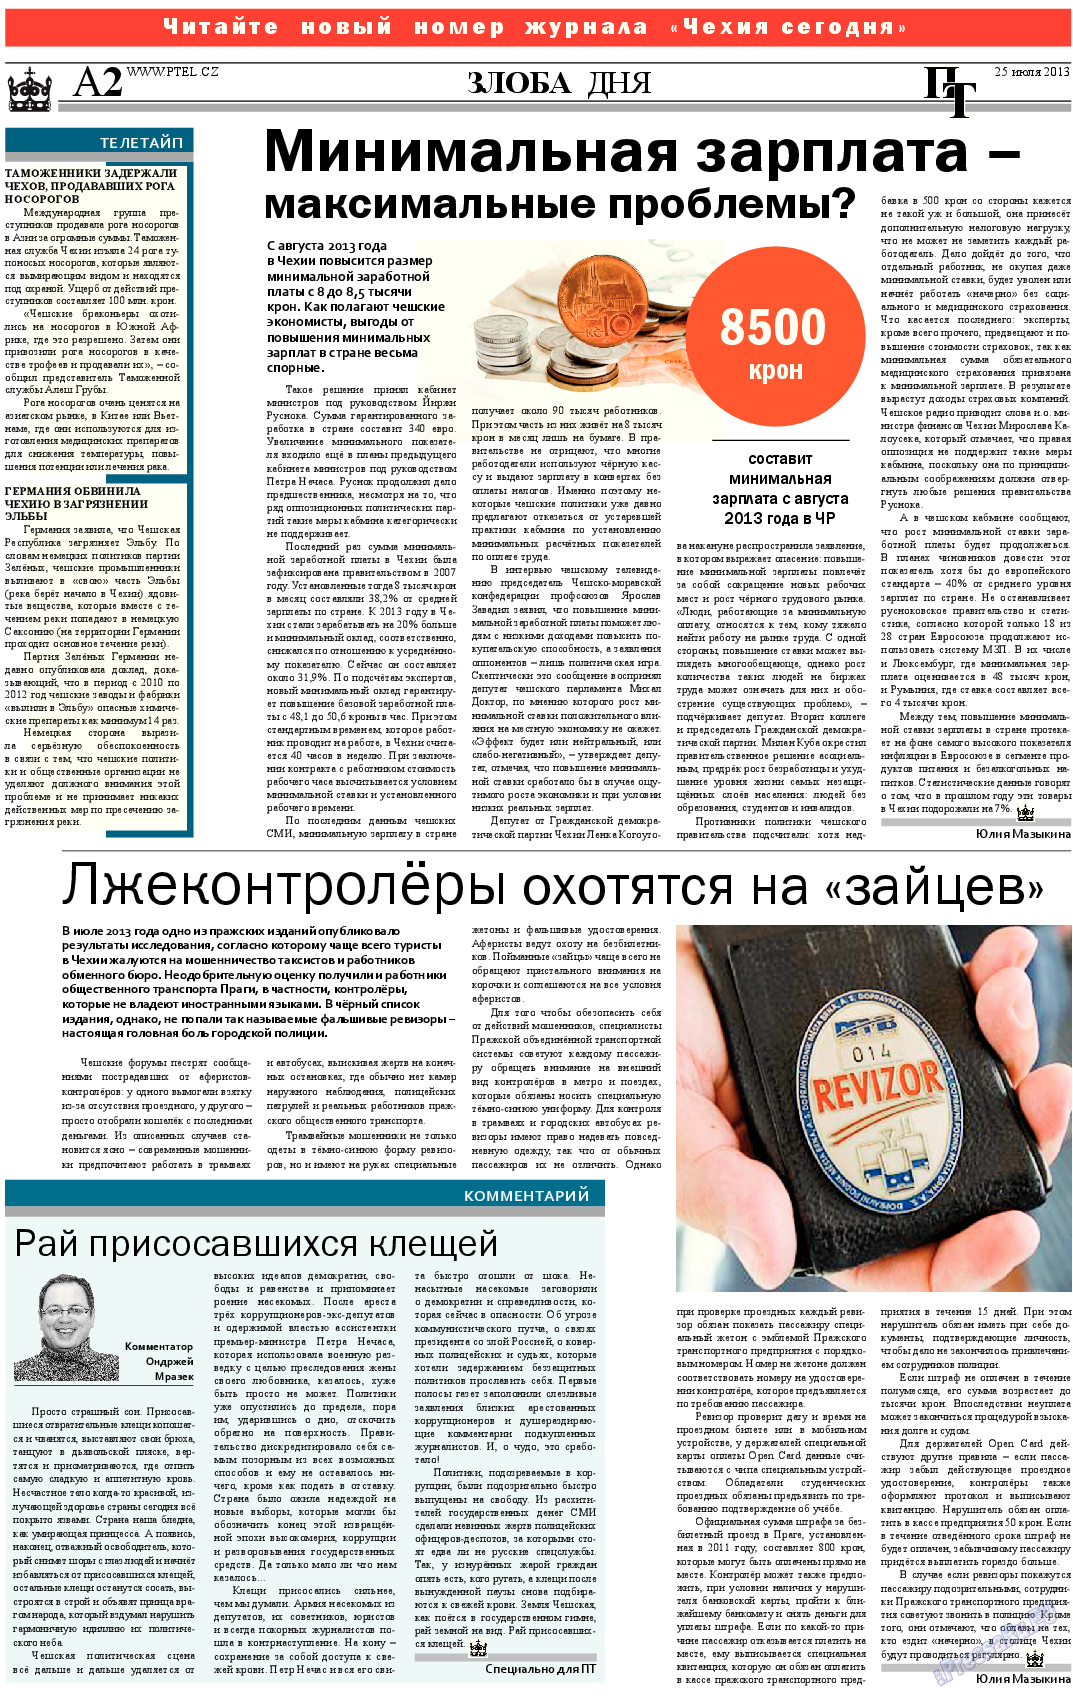 Пражский телеграф, газета. 2013 №29 стр.2